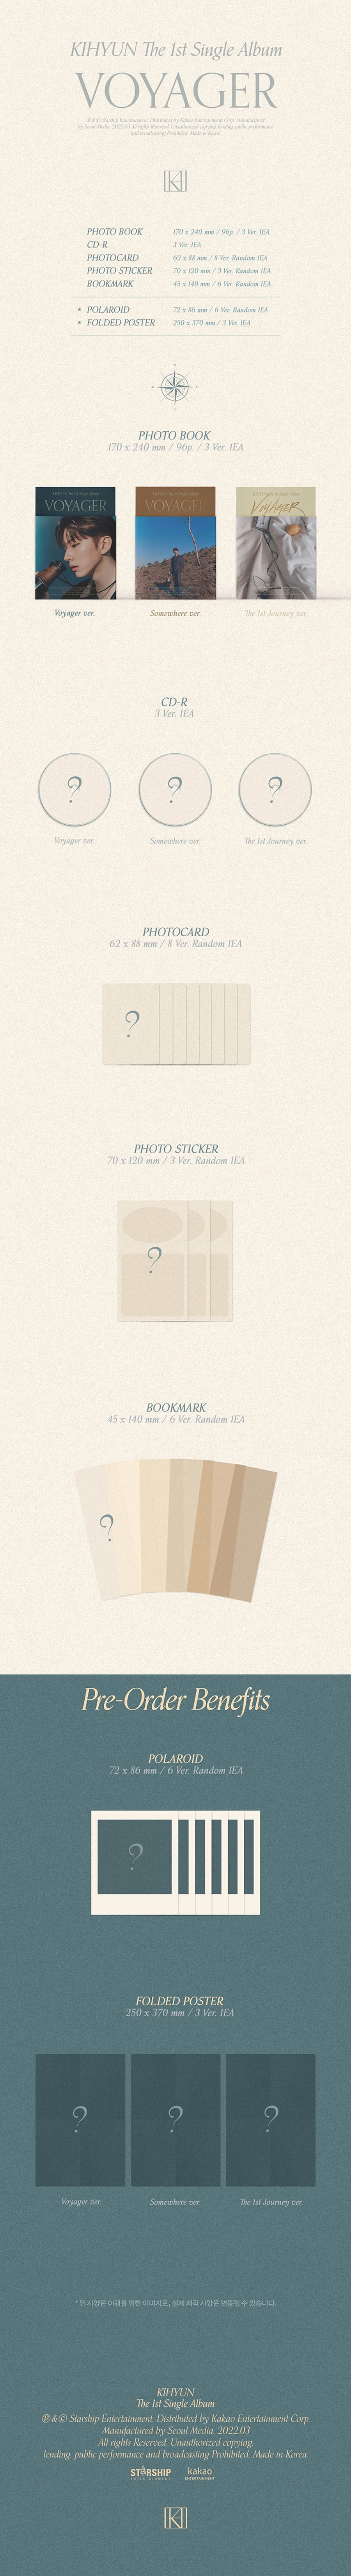 monsta-x-kihyun-1st-single-album-voyager-wholesale